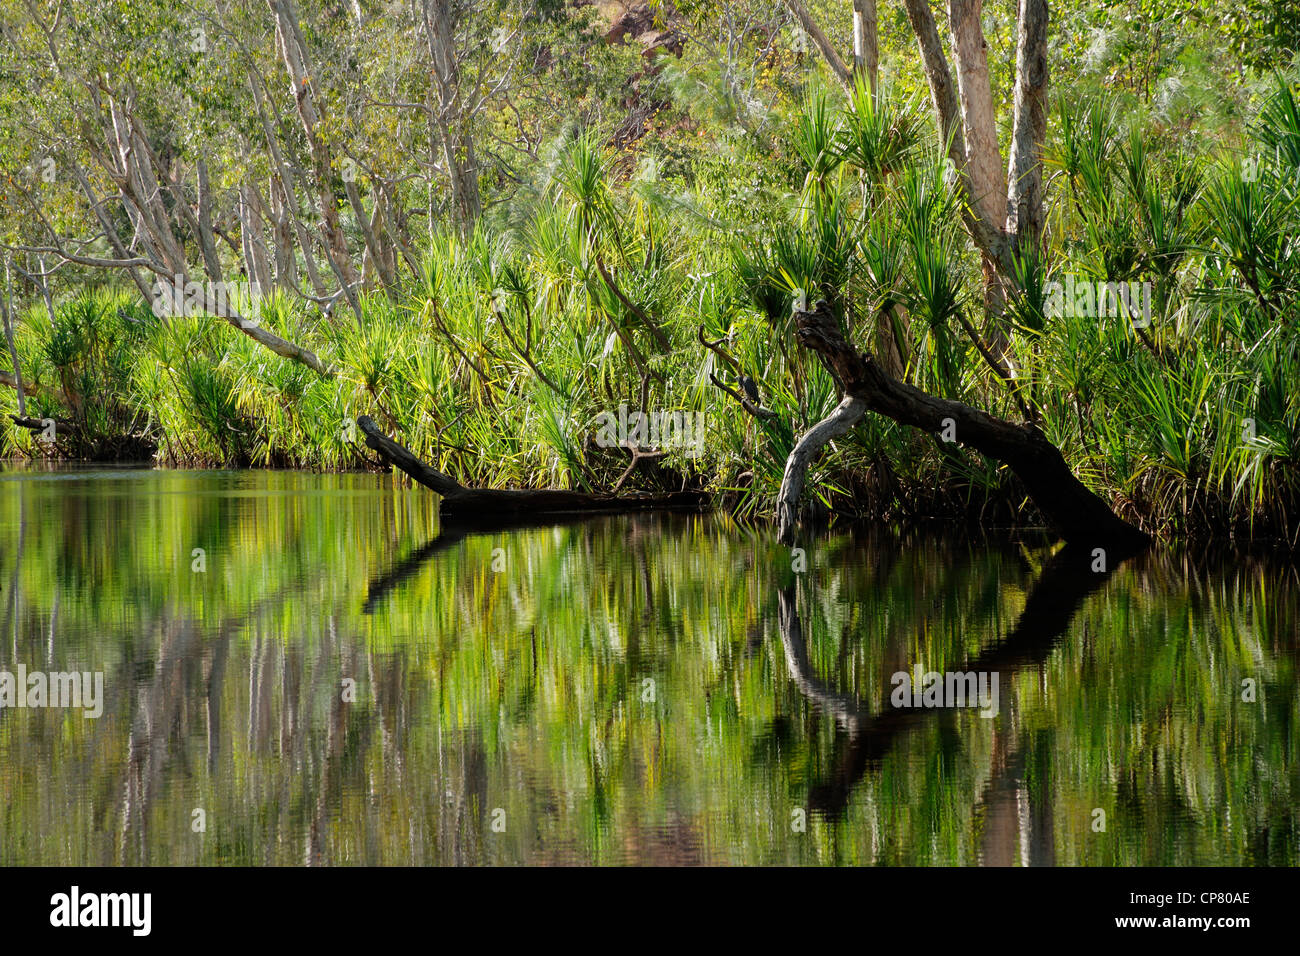 Trees with reflections, Leliyn (Edith falls), Nitmiluk National Park, Northern Territory, Australia Stock Photo